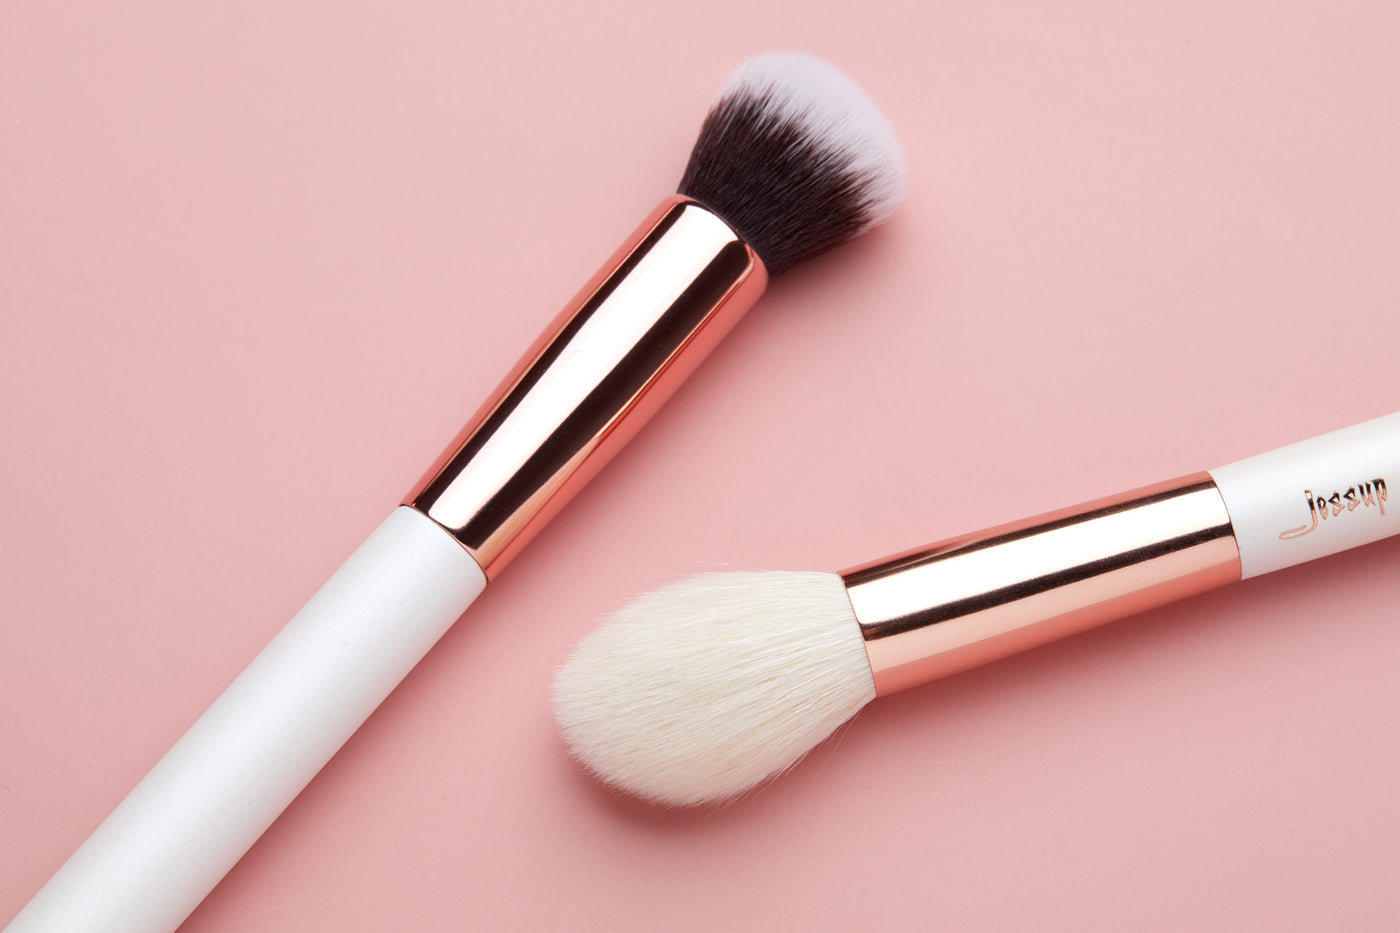 rose gold and white makeup brushes 15pcs - Jessup Beauty UK